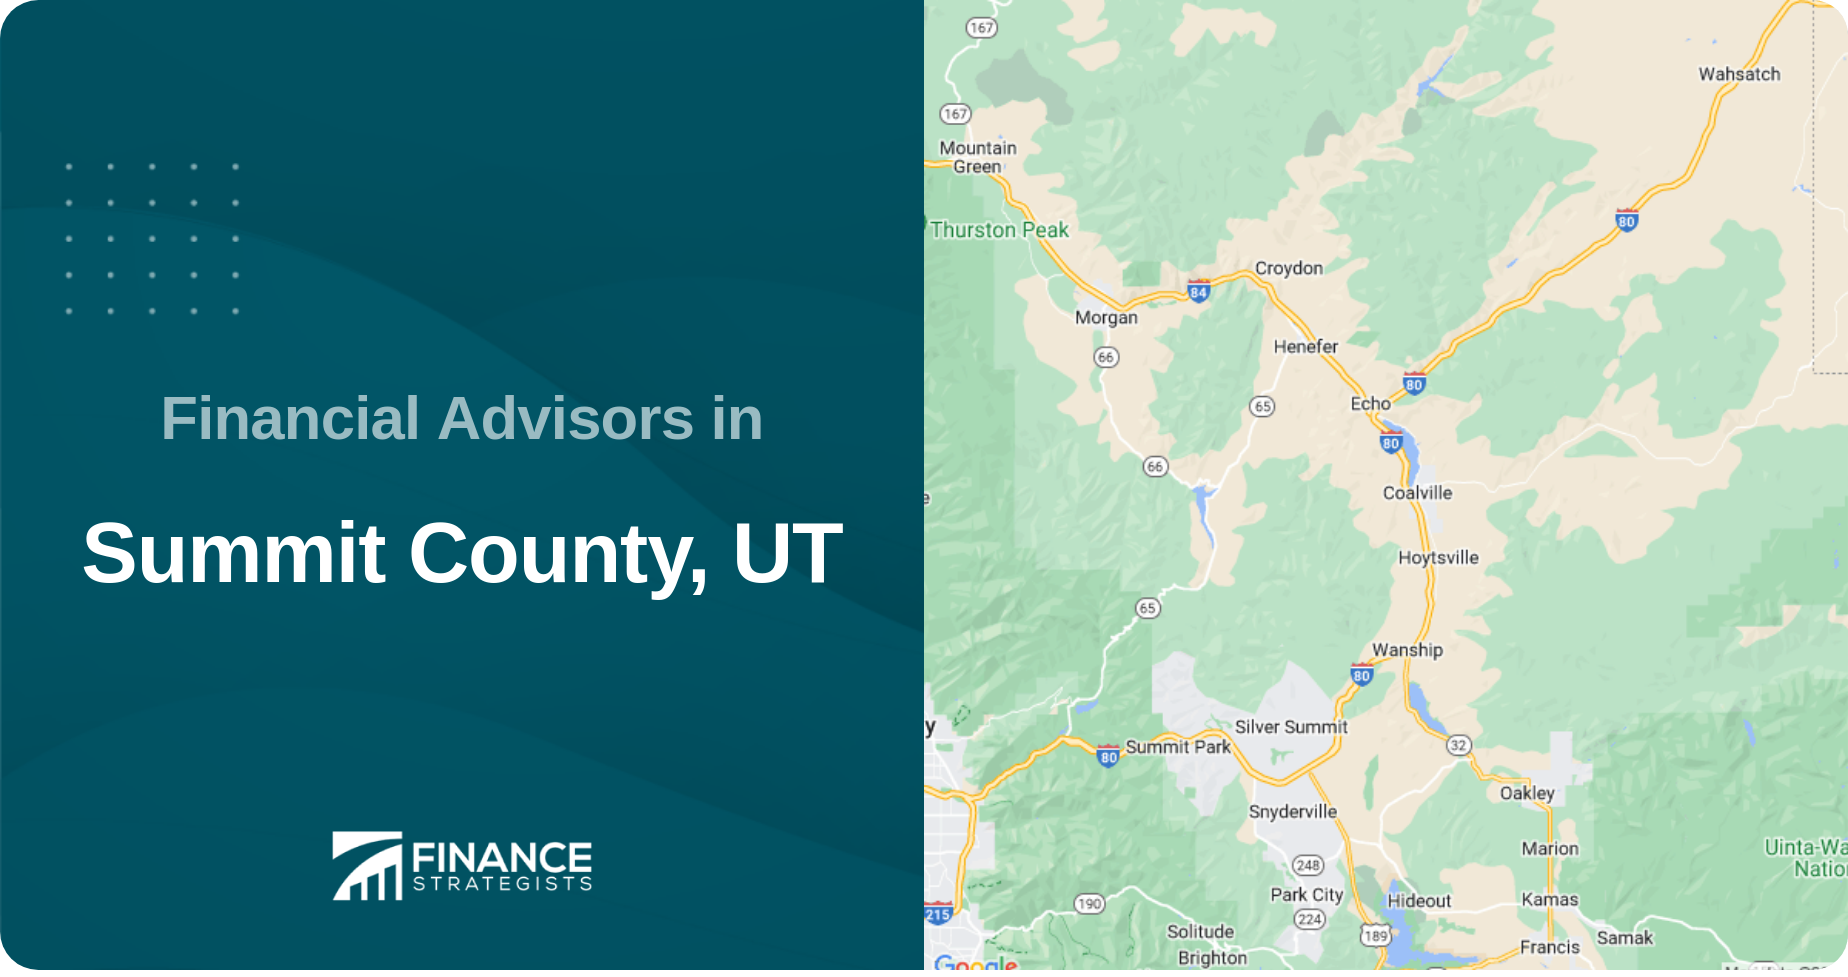 Financial Advisors in Summit County, UT